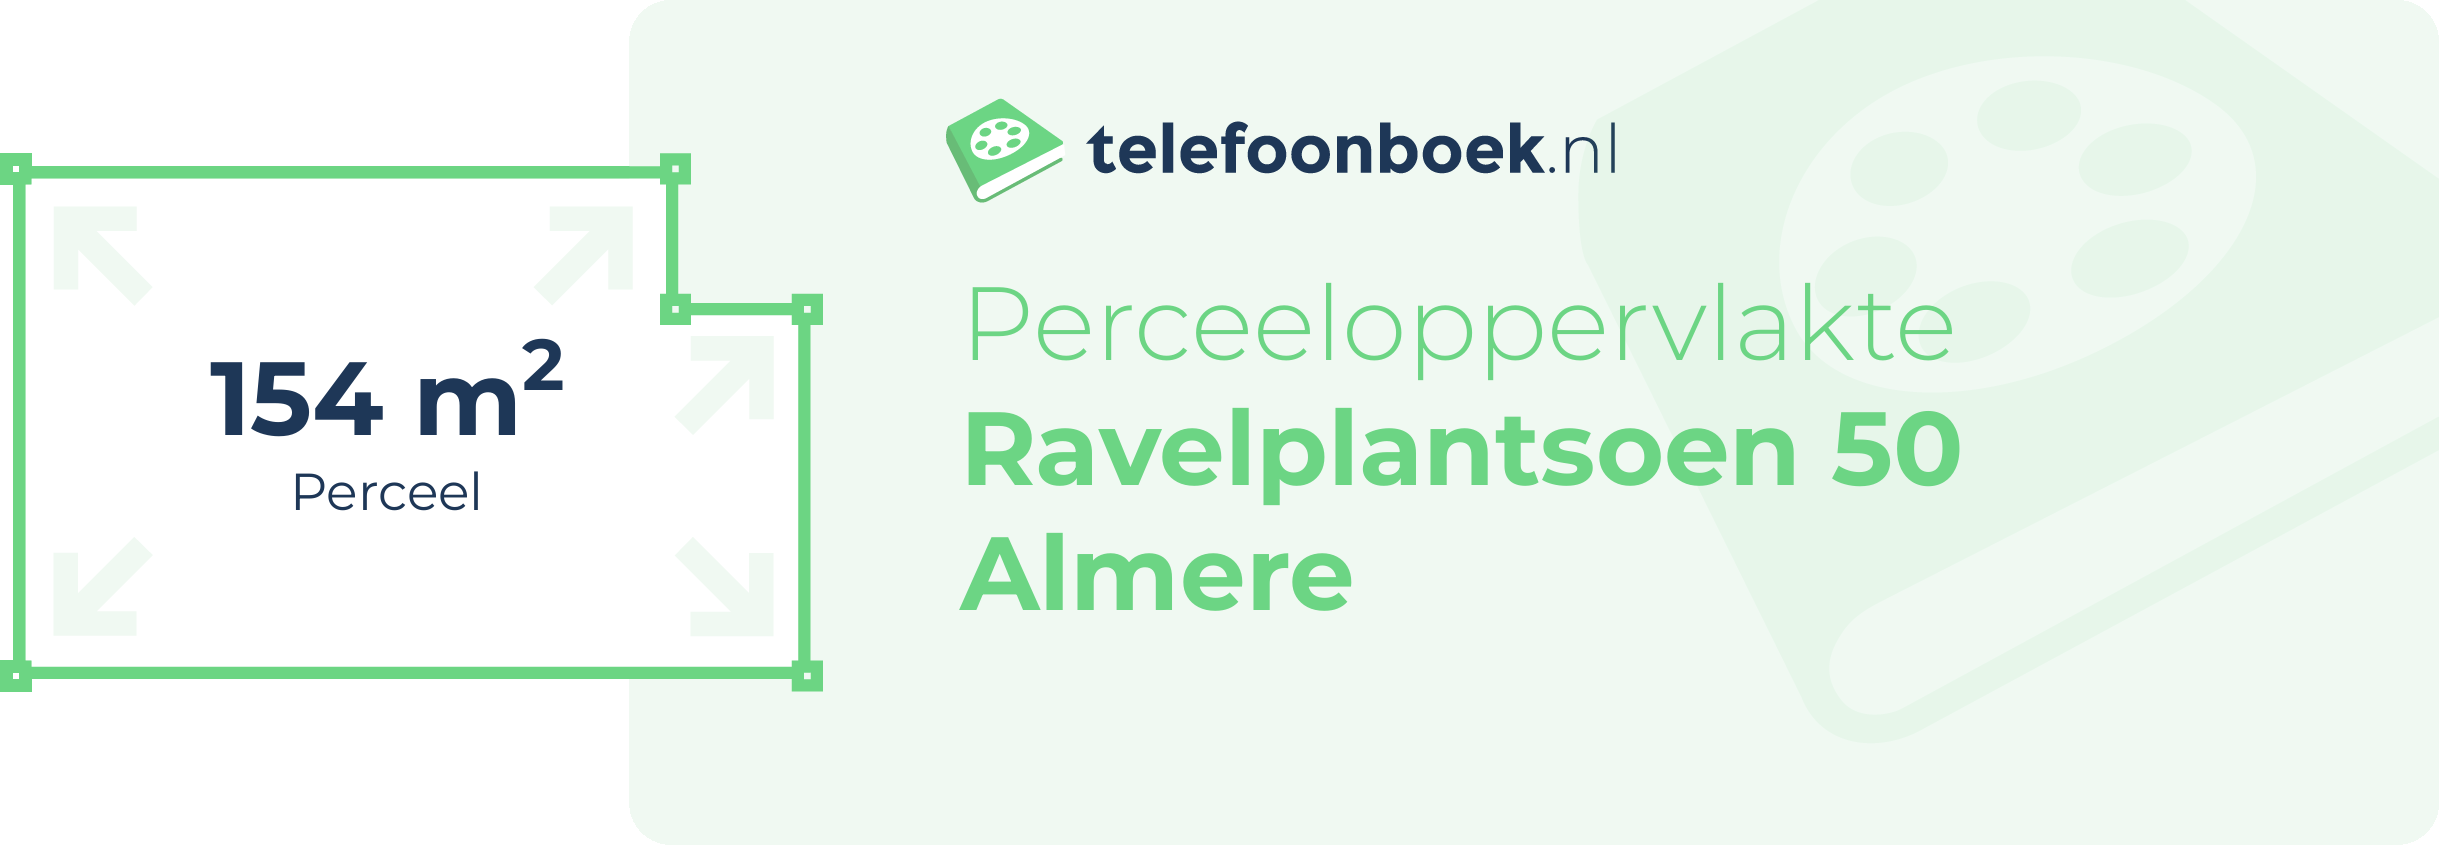 Perceeloppervlakte Ravelplantsoen 50 Almere